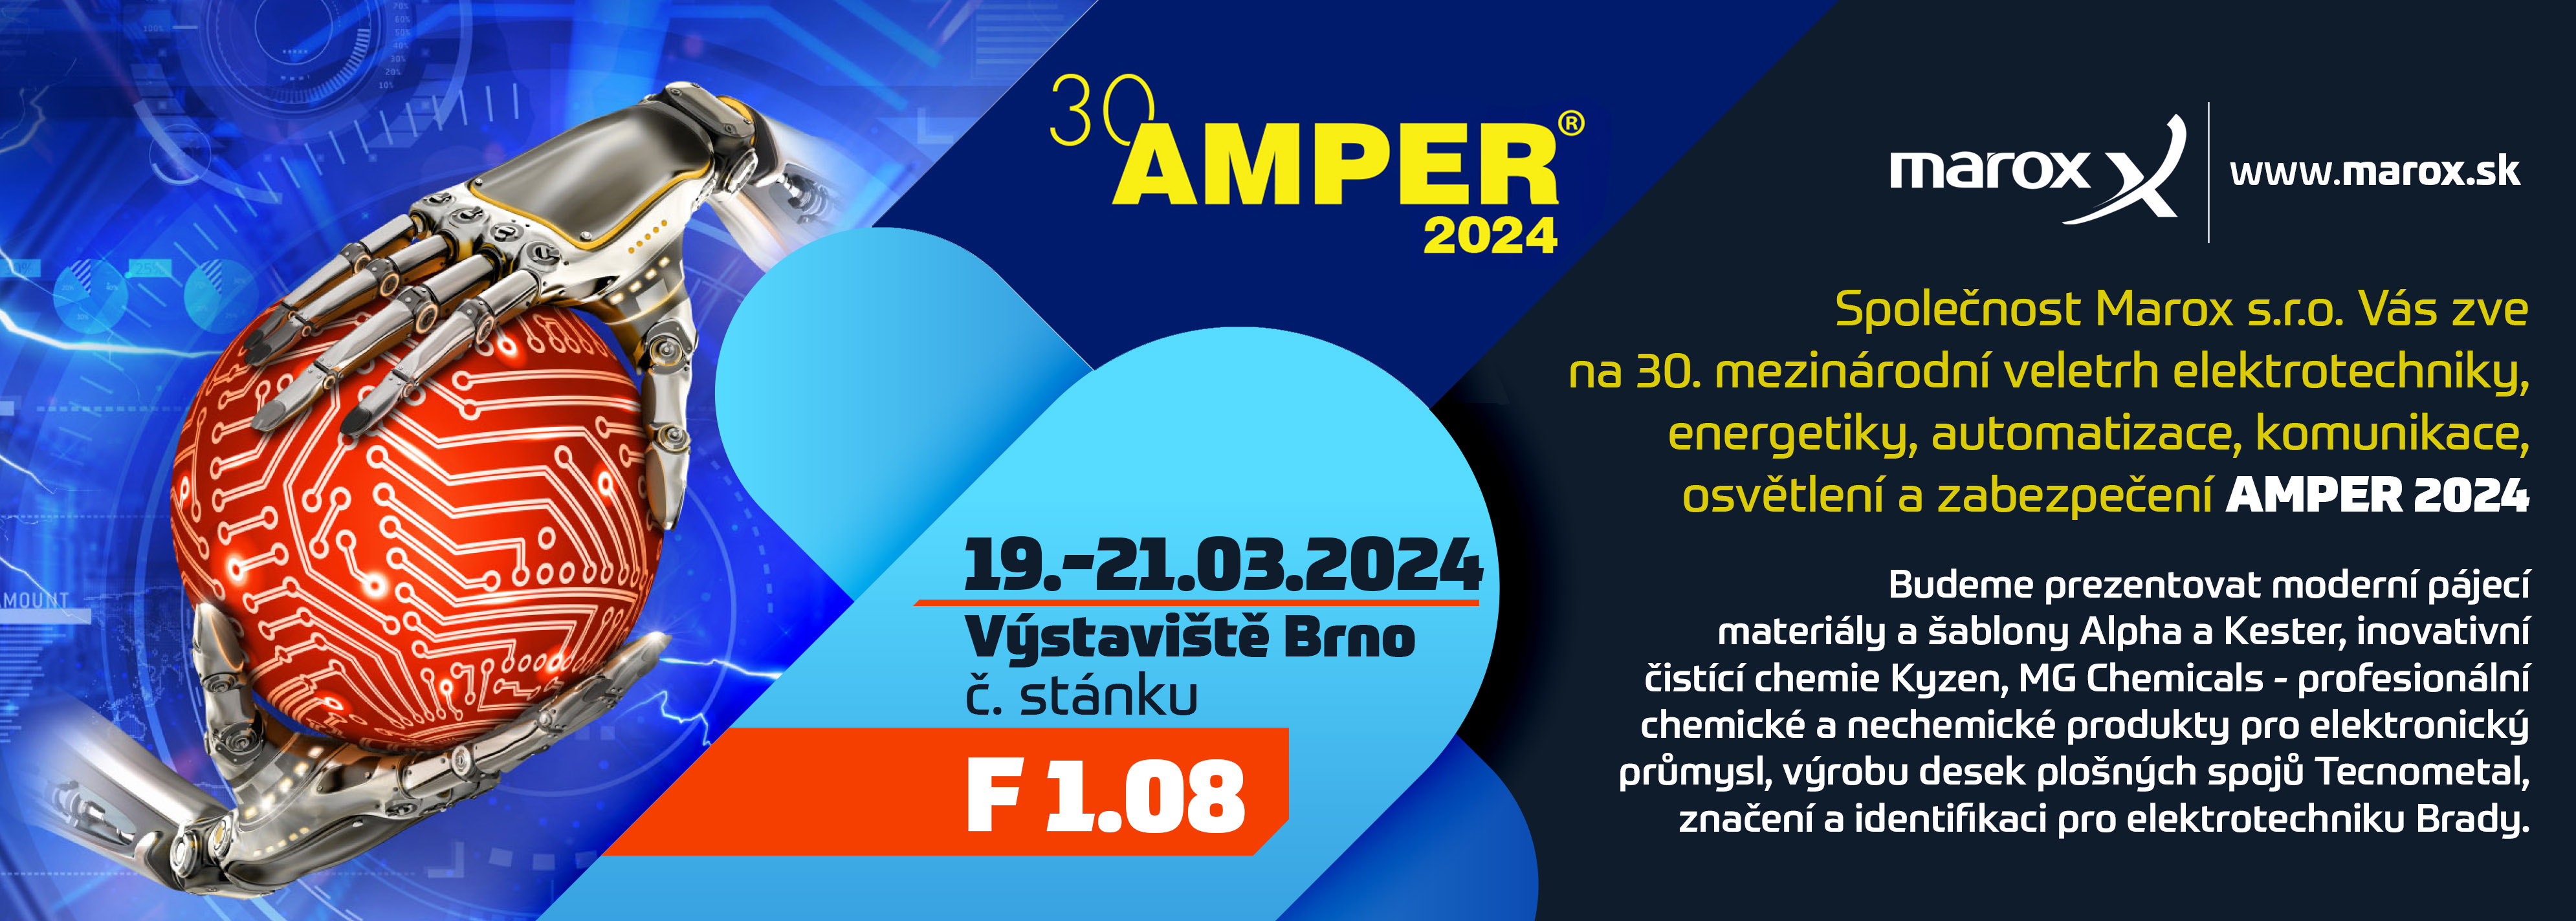 amper 2024 pozvanka cz